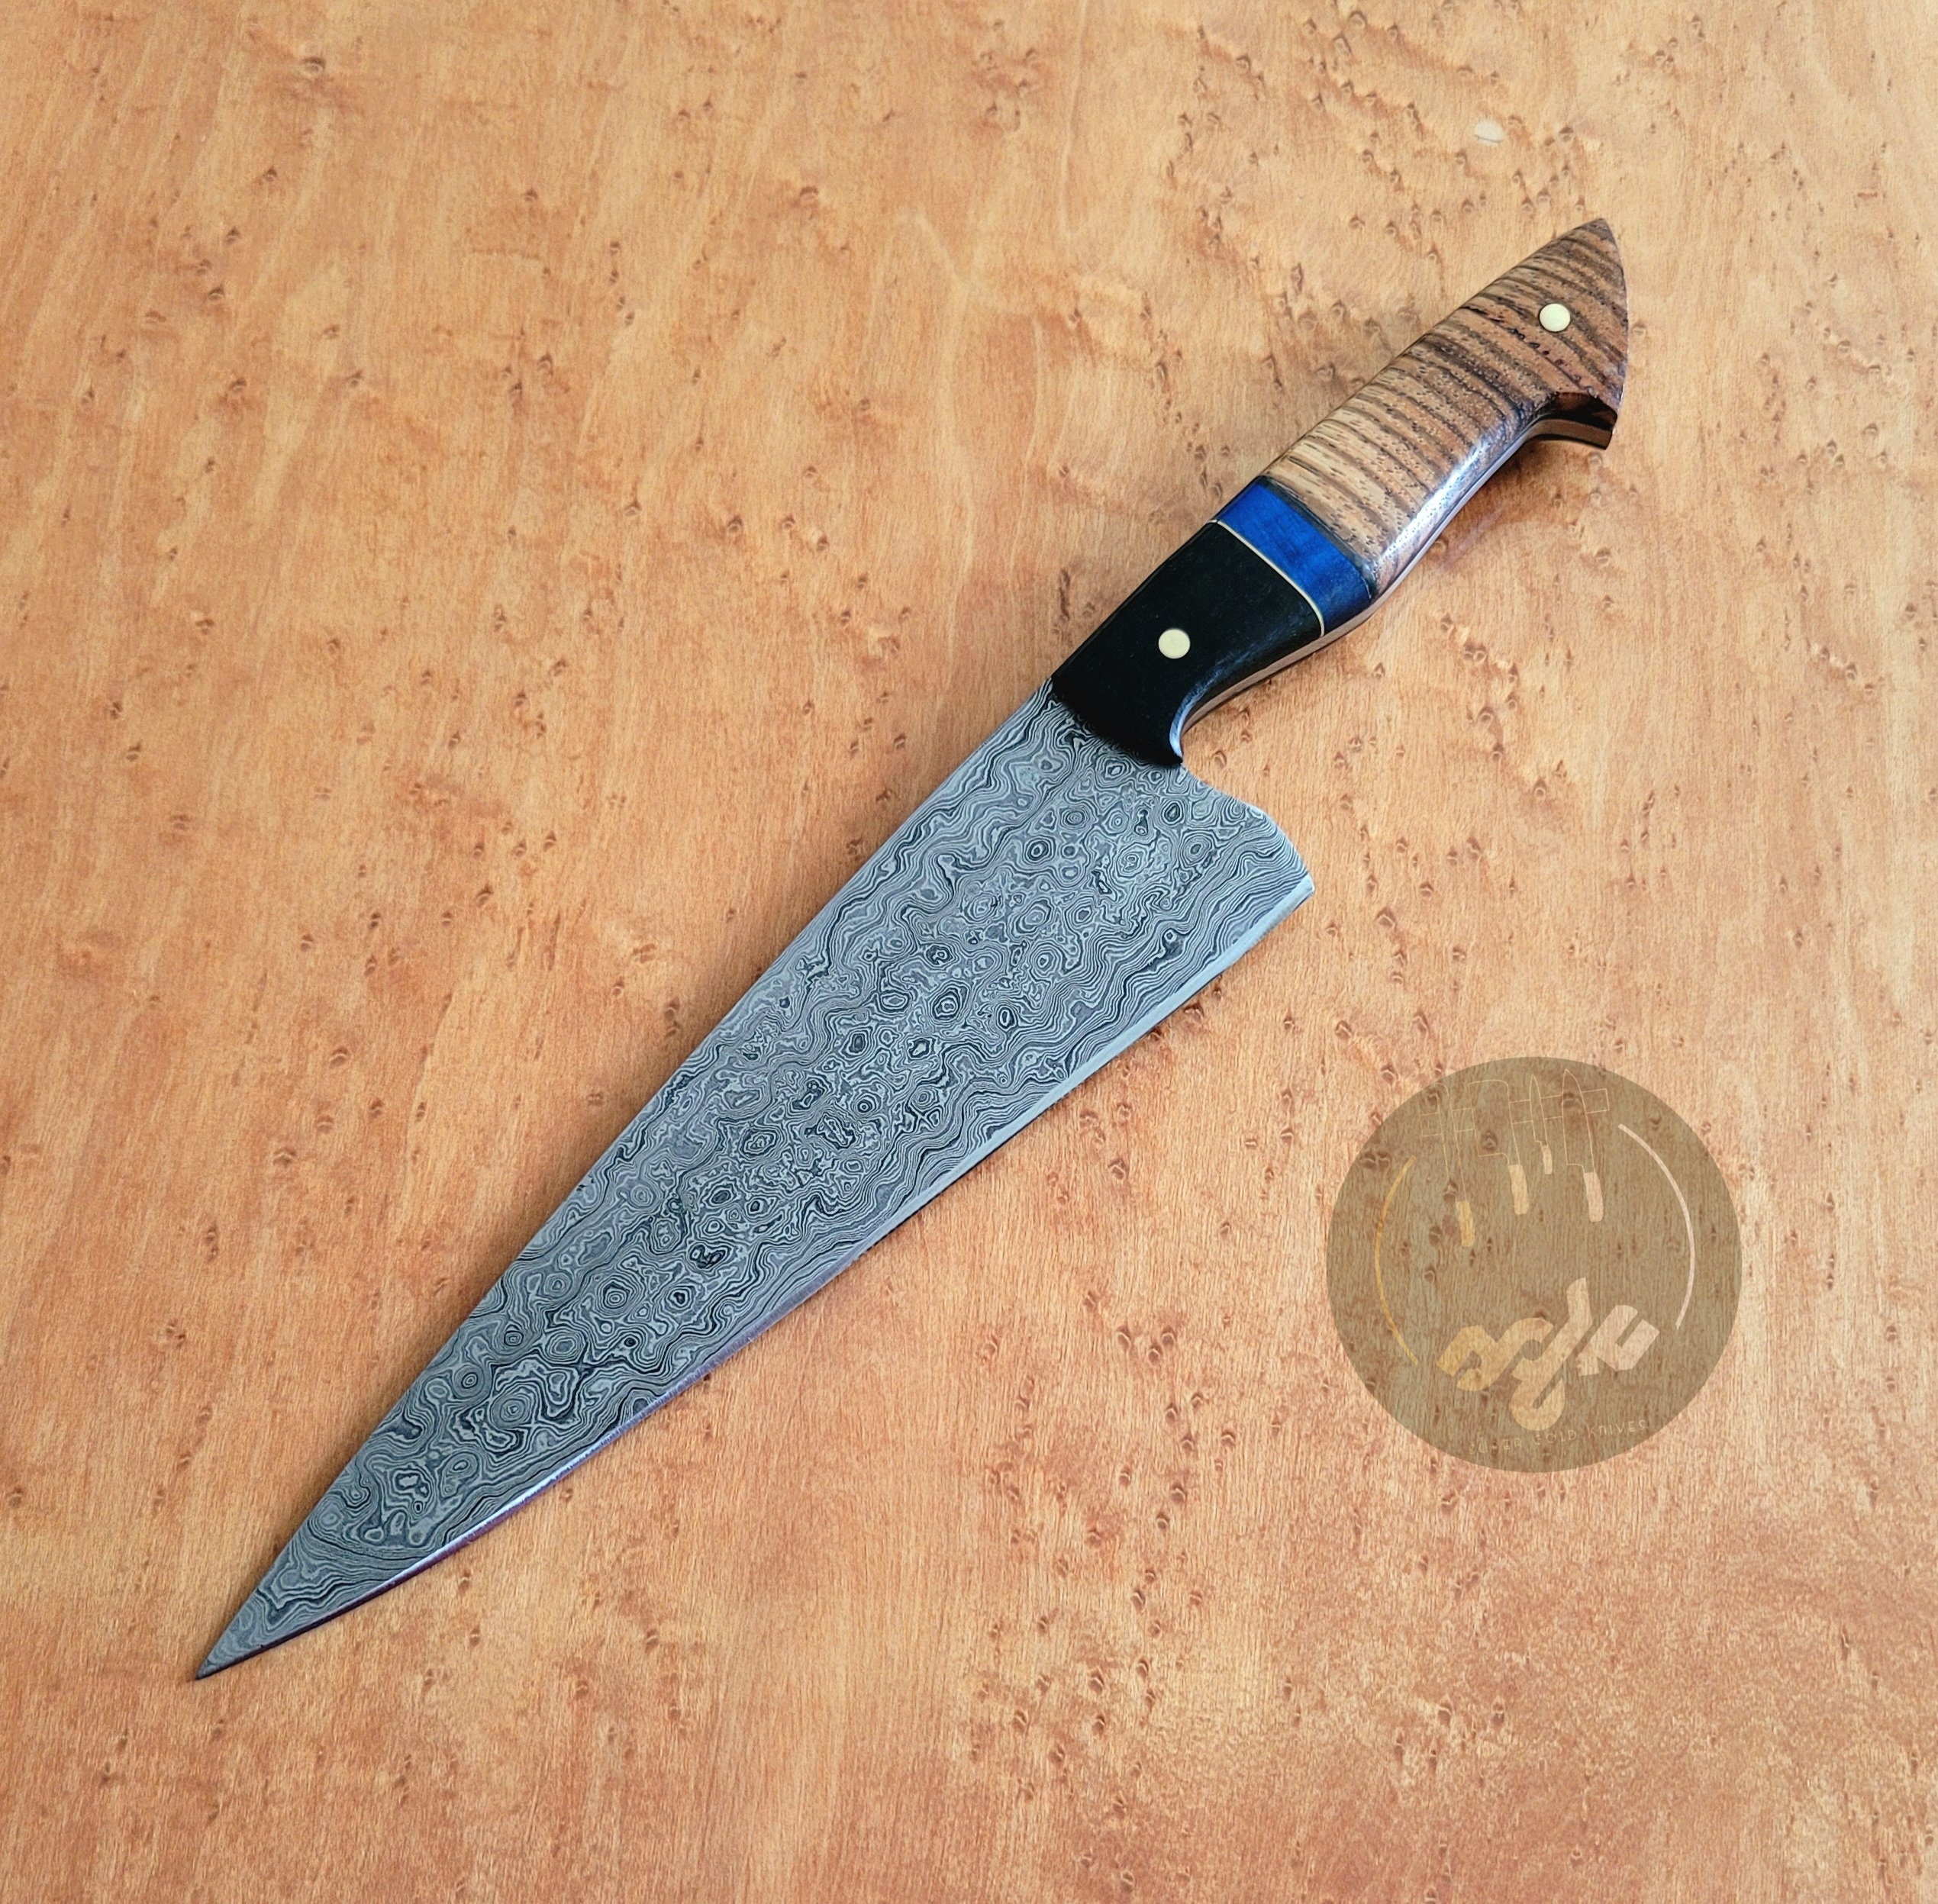 Full Tang Hunter - DIY Knife Kit w/Zebrawood Handle Scales (pre-machined)